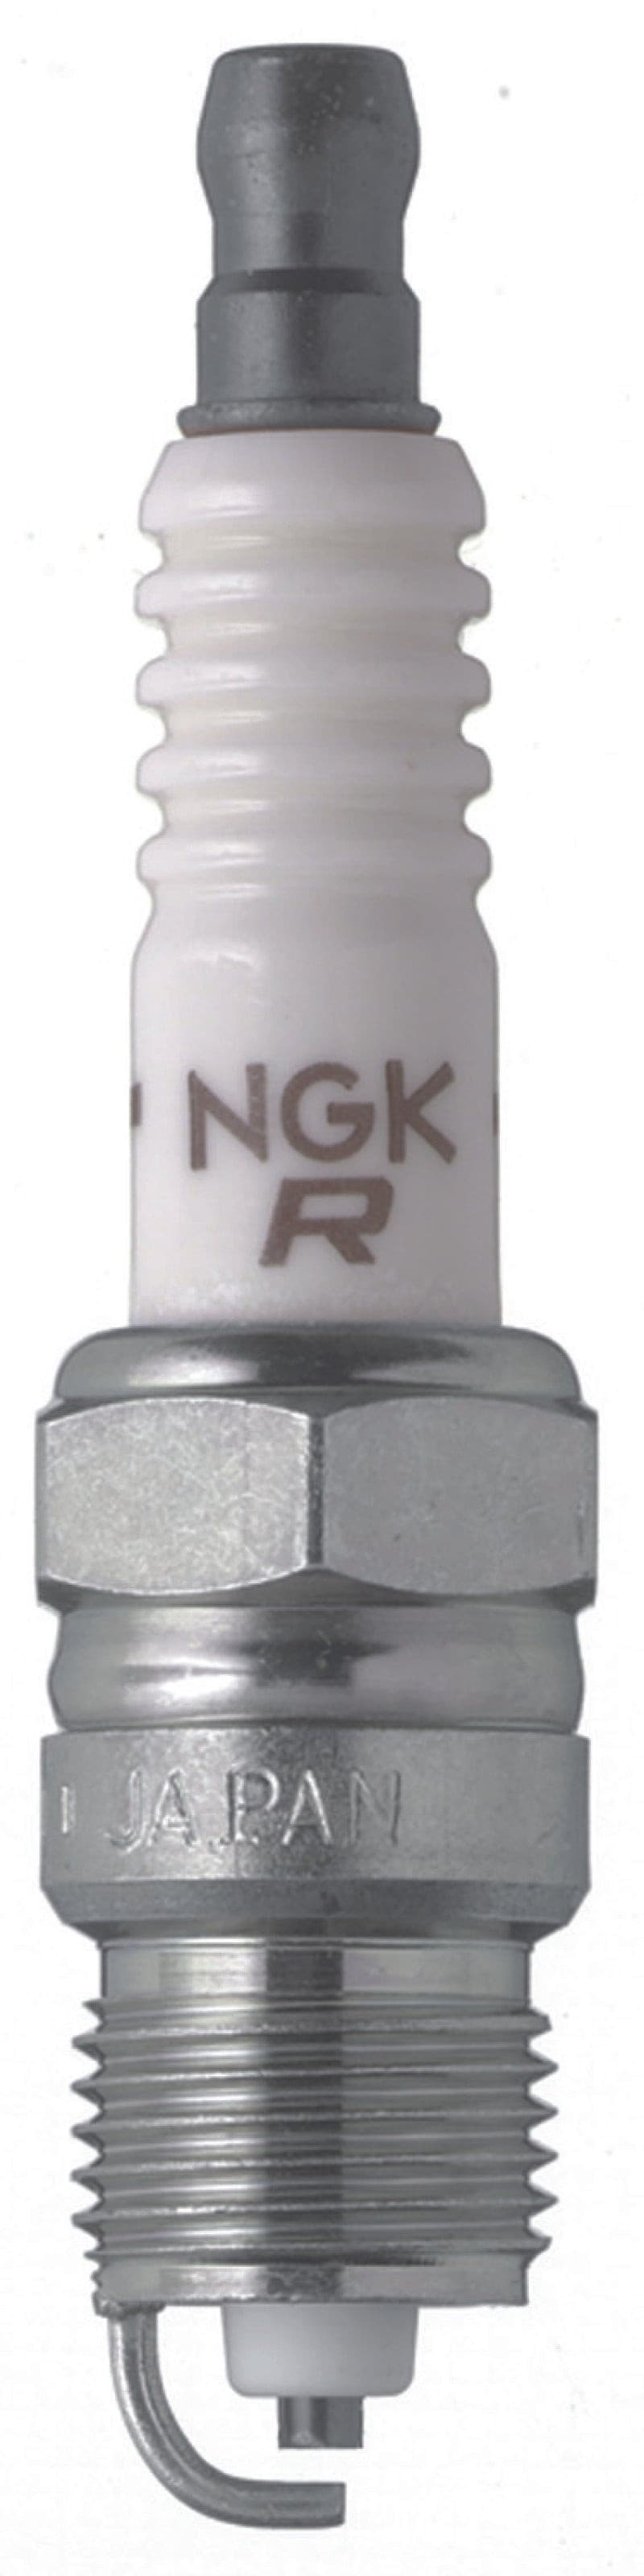 NGK V-Power Spark Plug Box of 4 (UR5).